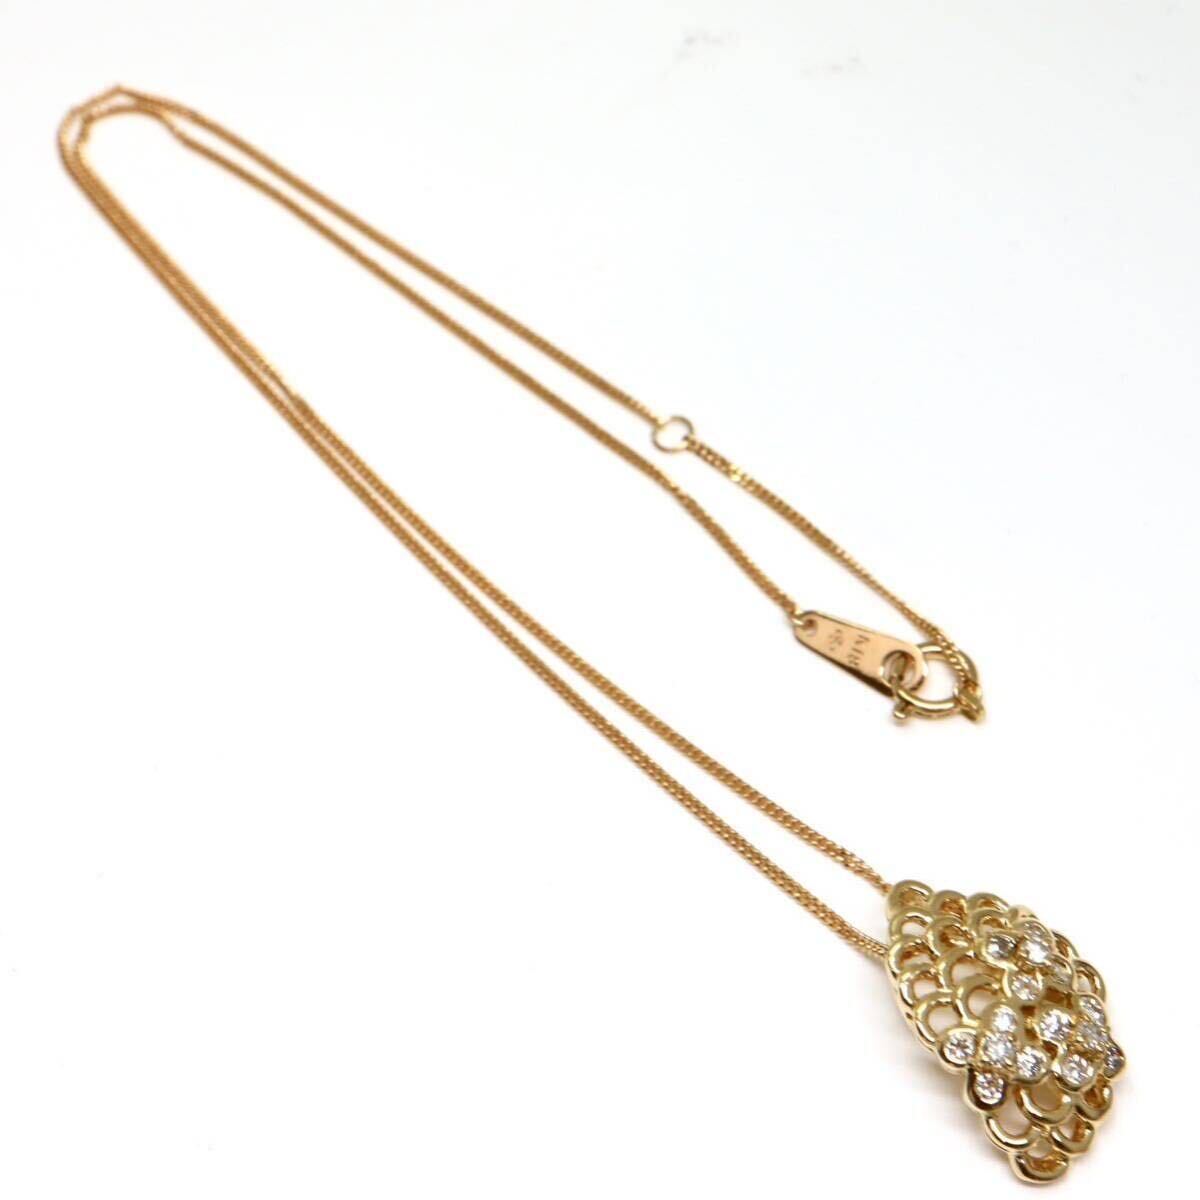 JEWELRY MAKI( jewelry maki){K18 natural diamond necklace }M 5.0g approximately 39.5cm 0.39ct necklace jewelry jewelry EE3/EE4